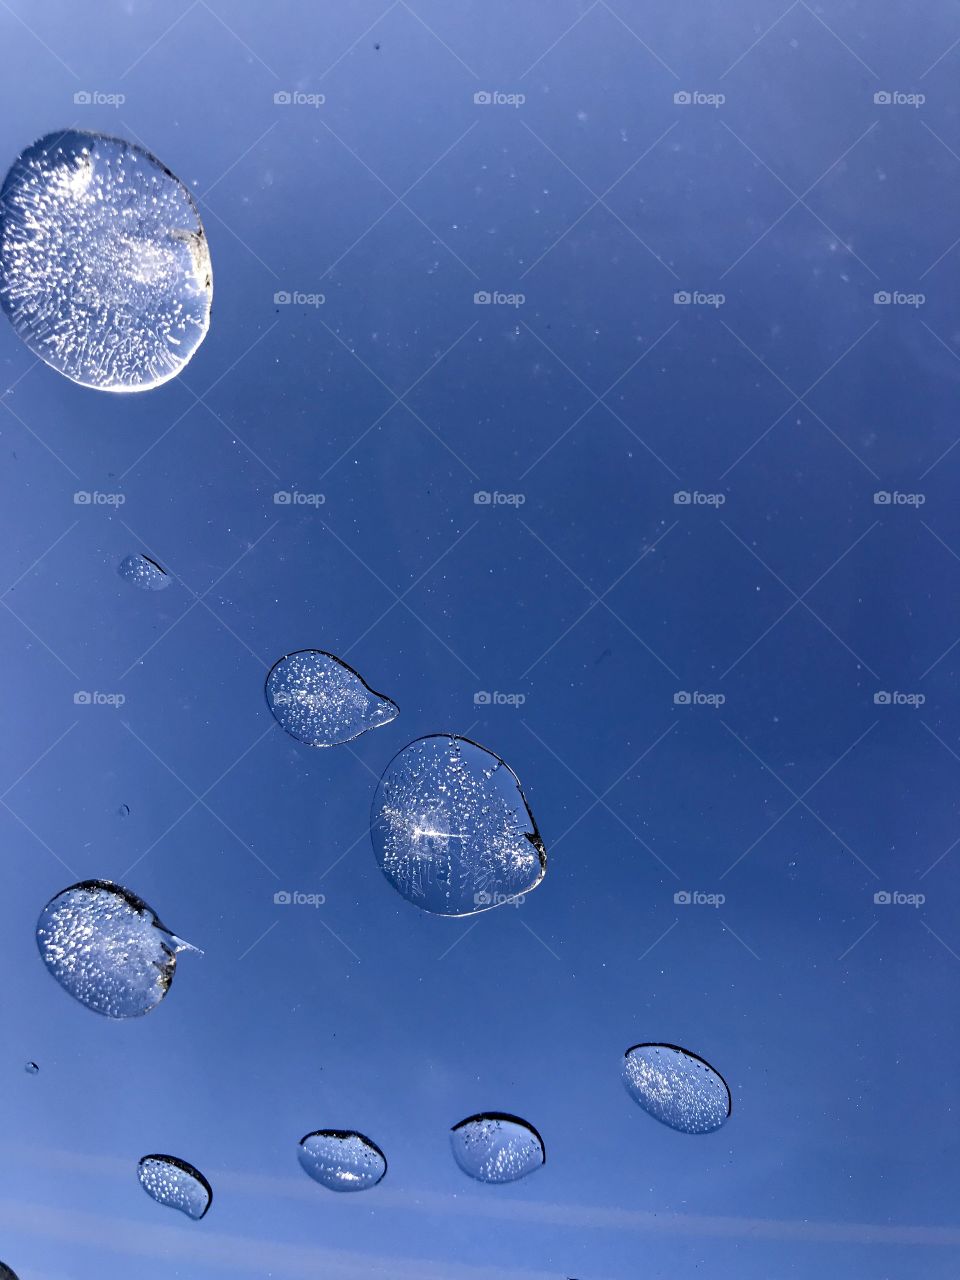 Frozen droplets in sunroof (Canadian winter)